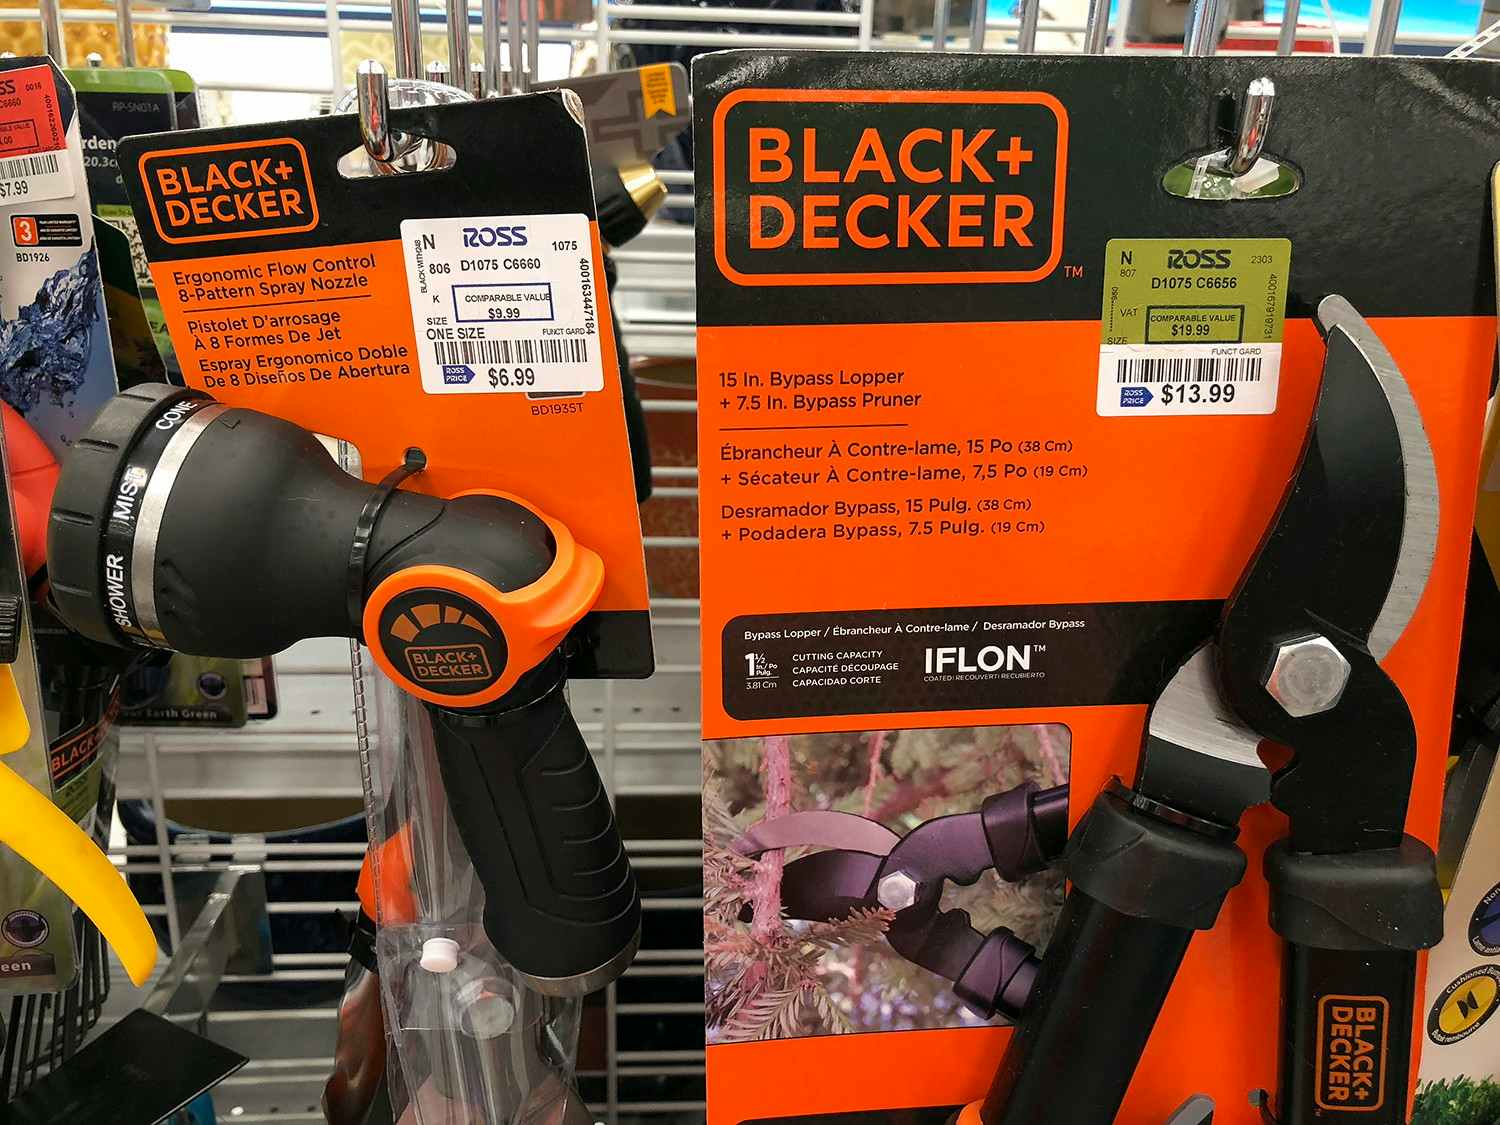 Black + Decker pruner sets $6 less than Amazon at Ross.